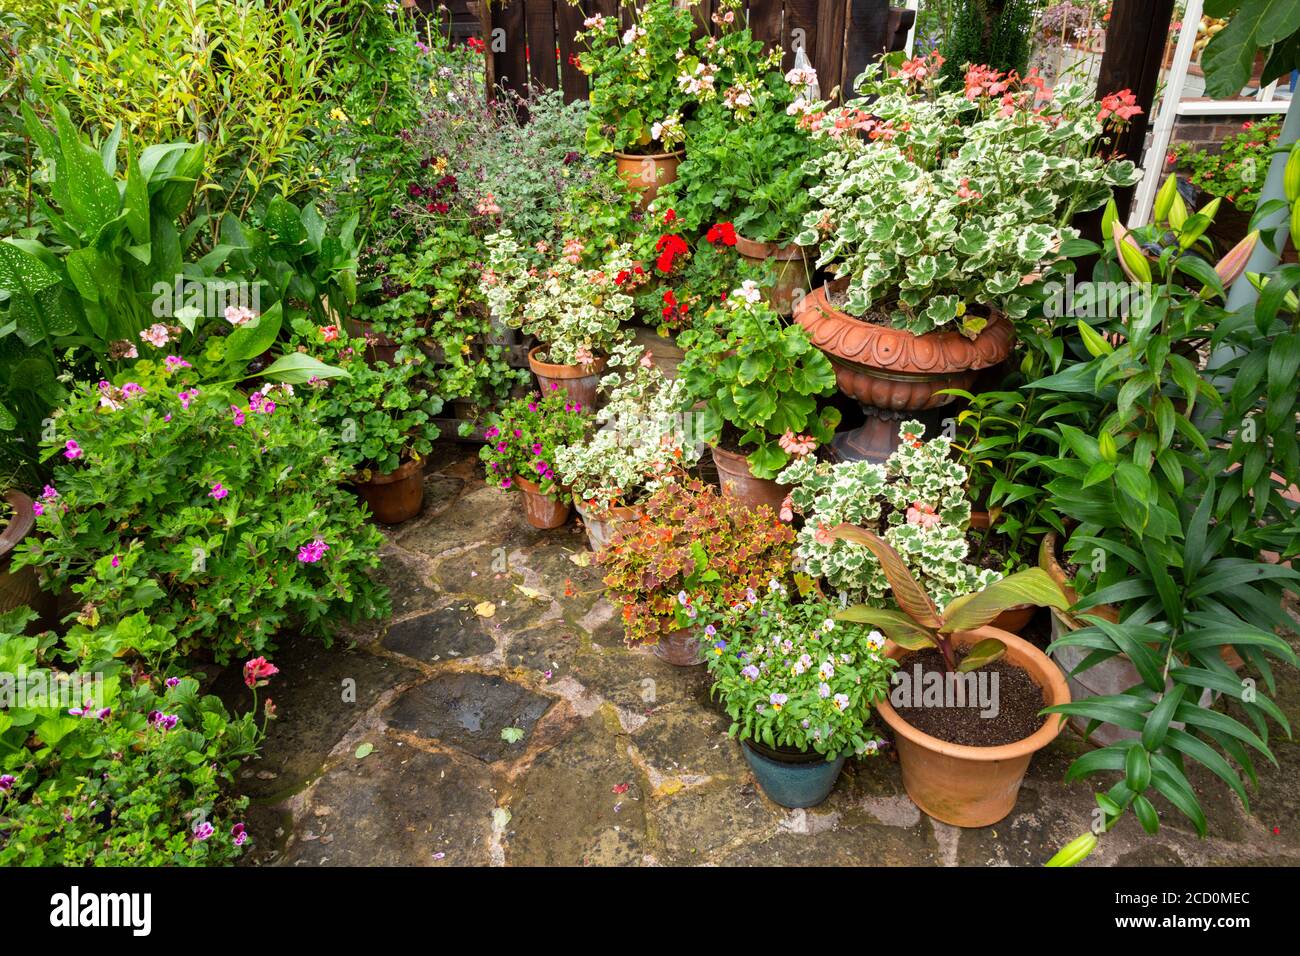 Plants in ceramic pots in a garden Stock Photo